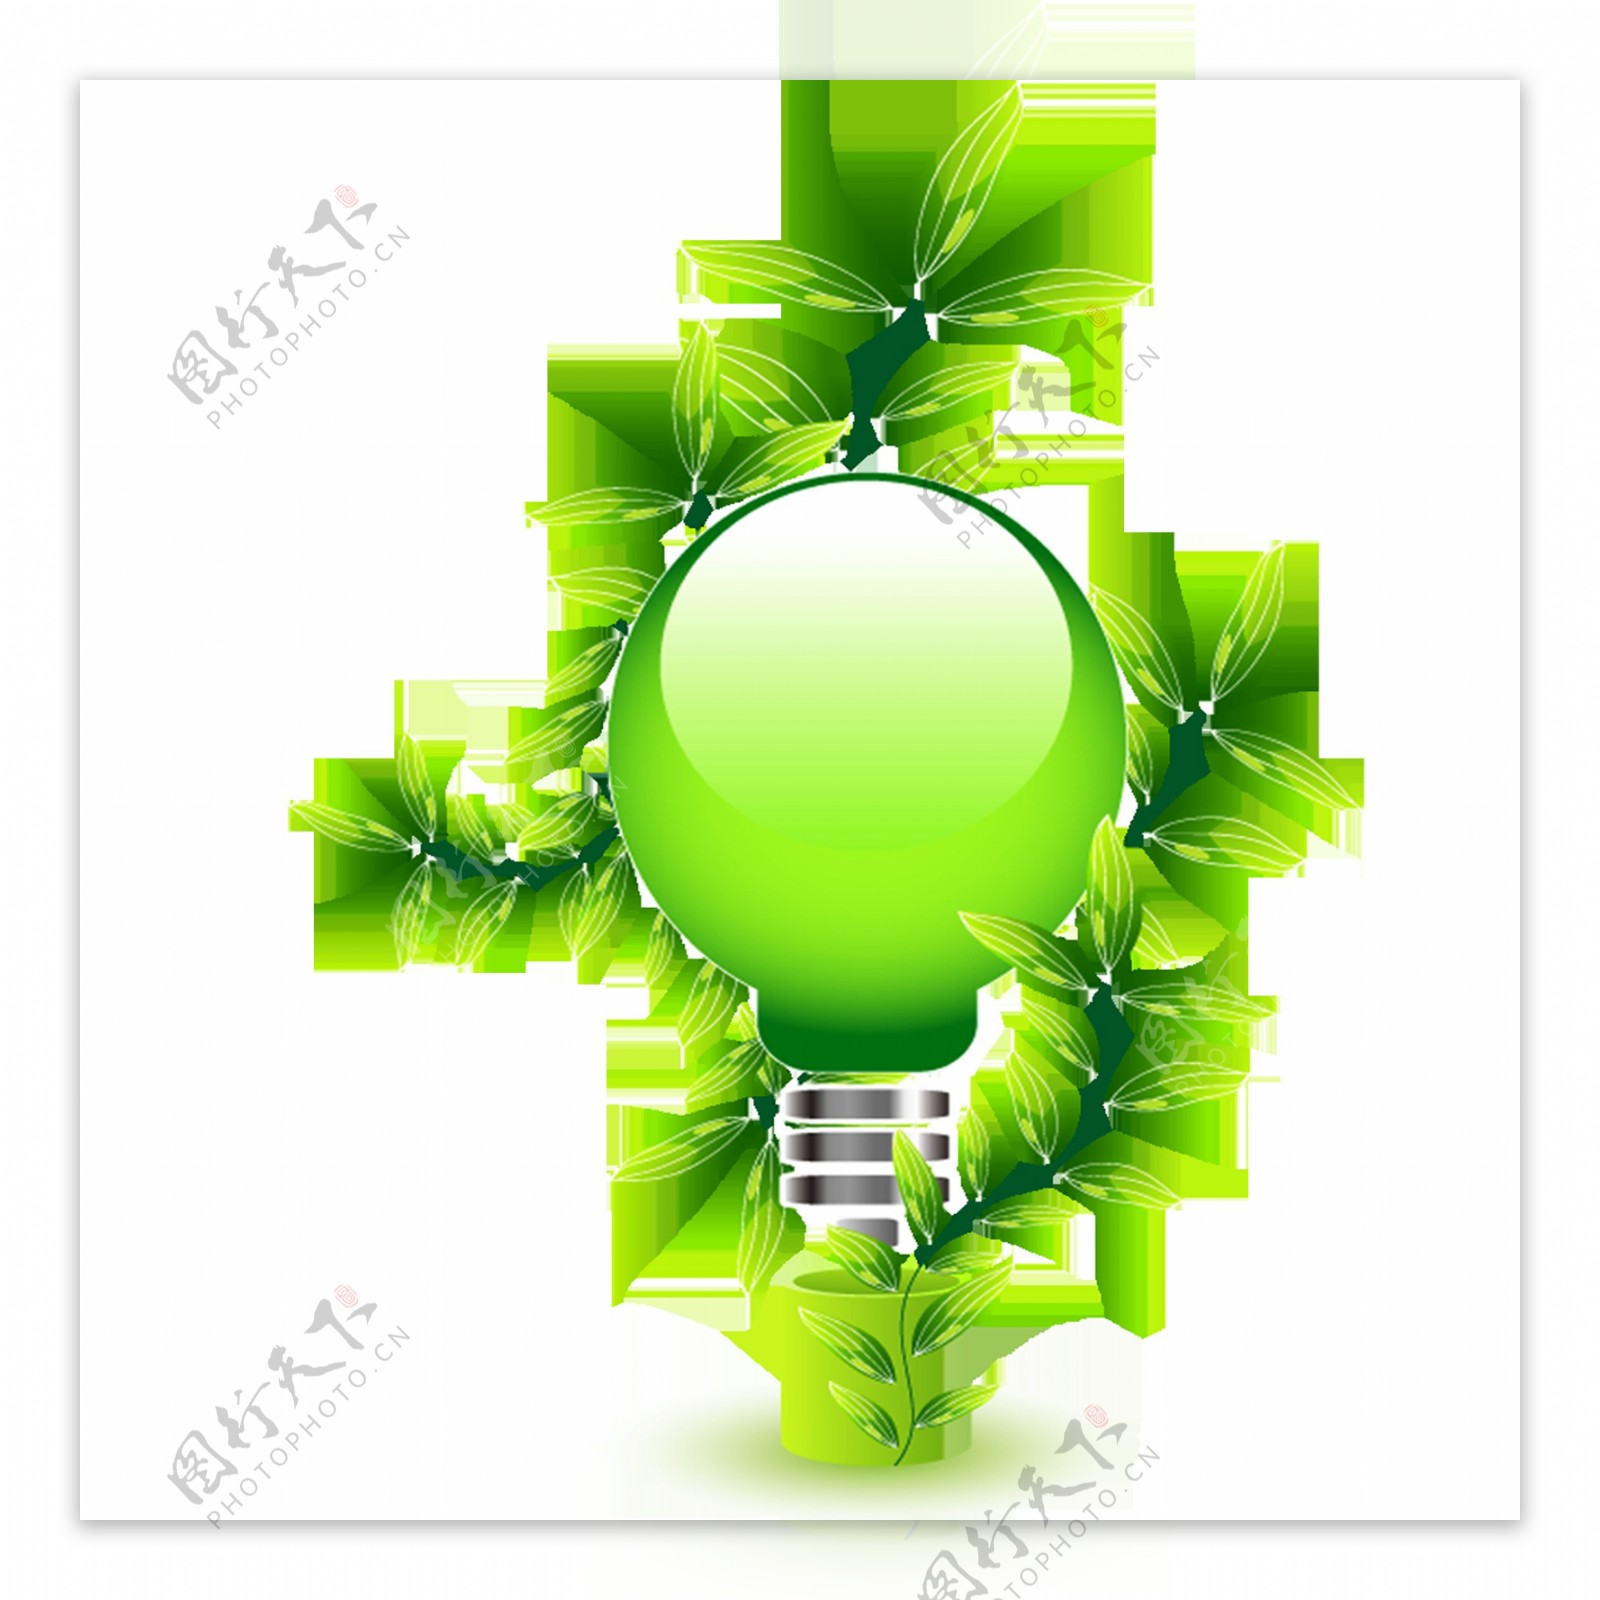 绿色灯泡图